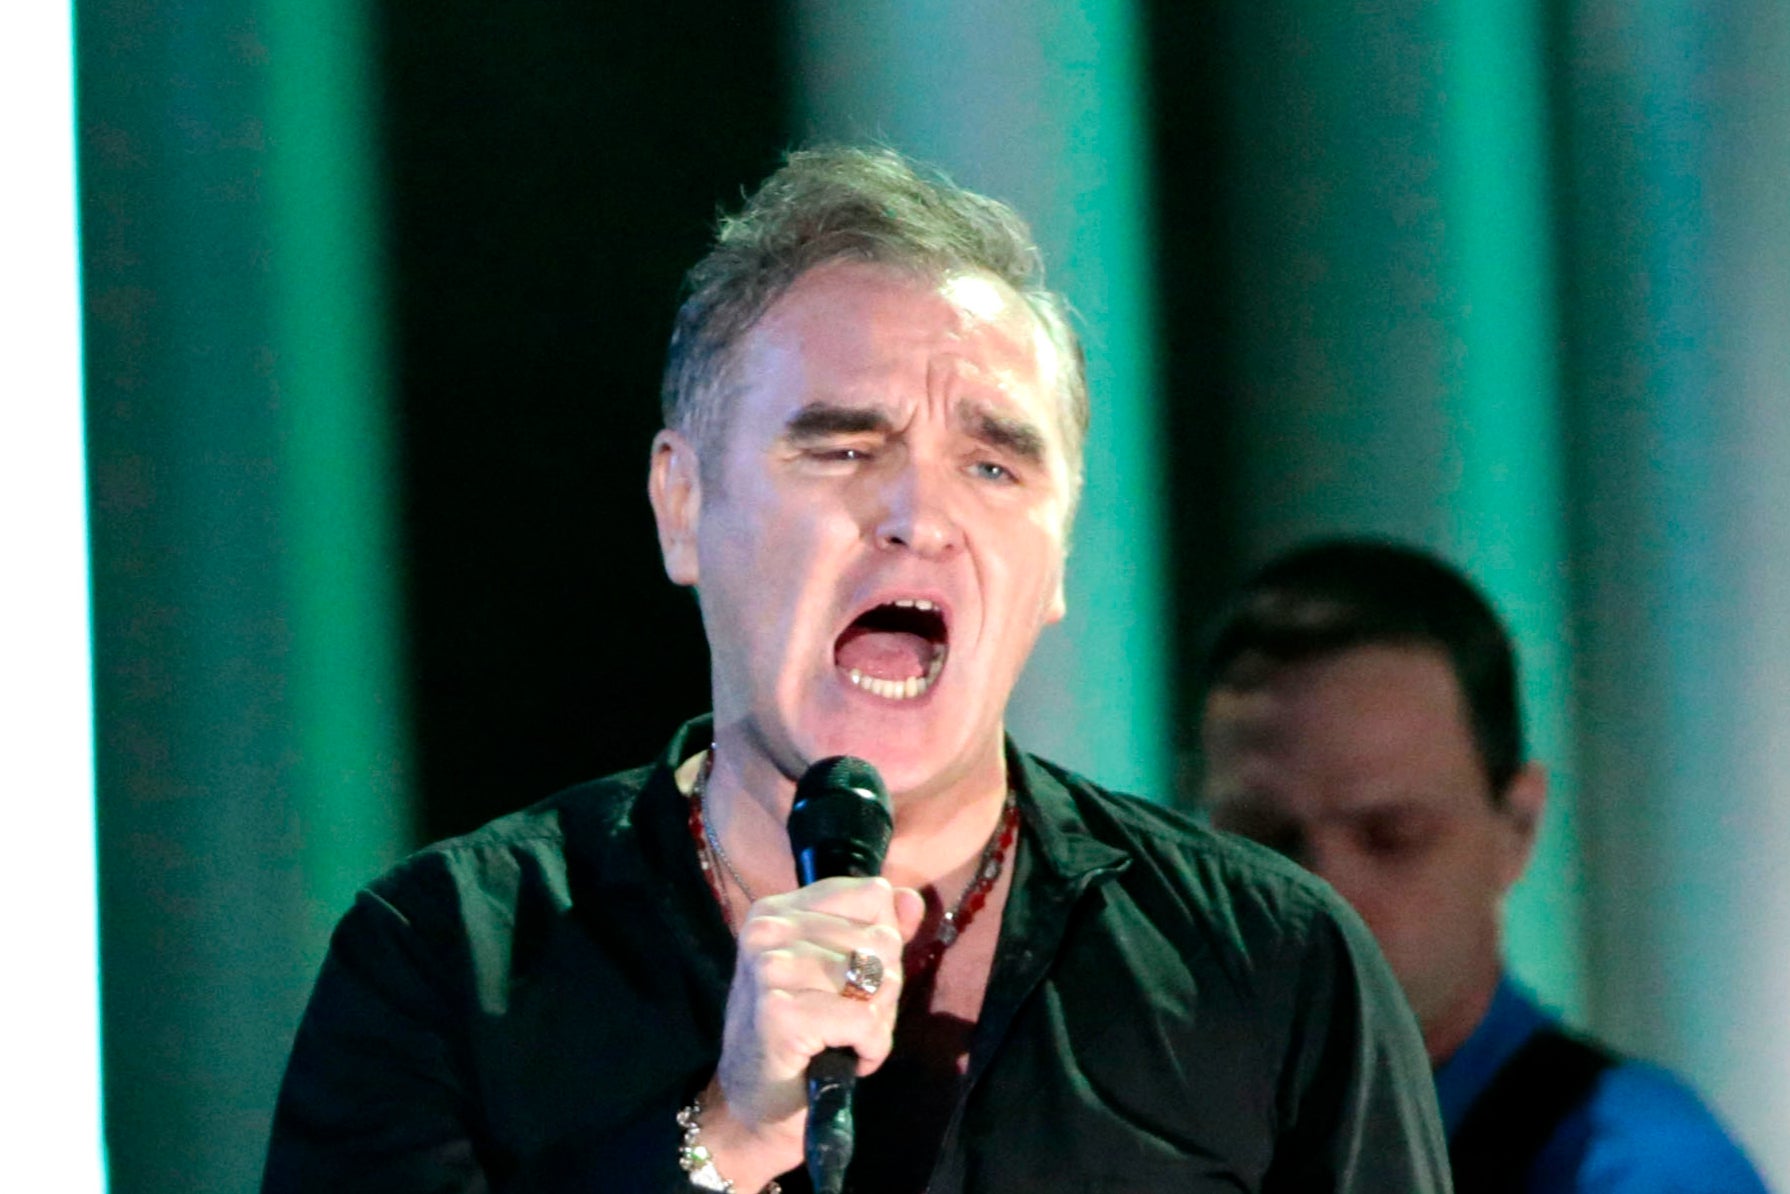 Morrissey performing in 2013